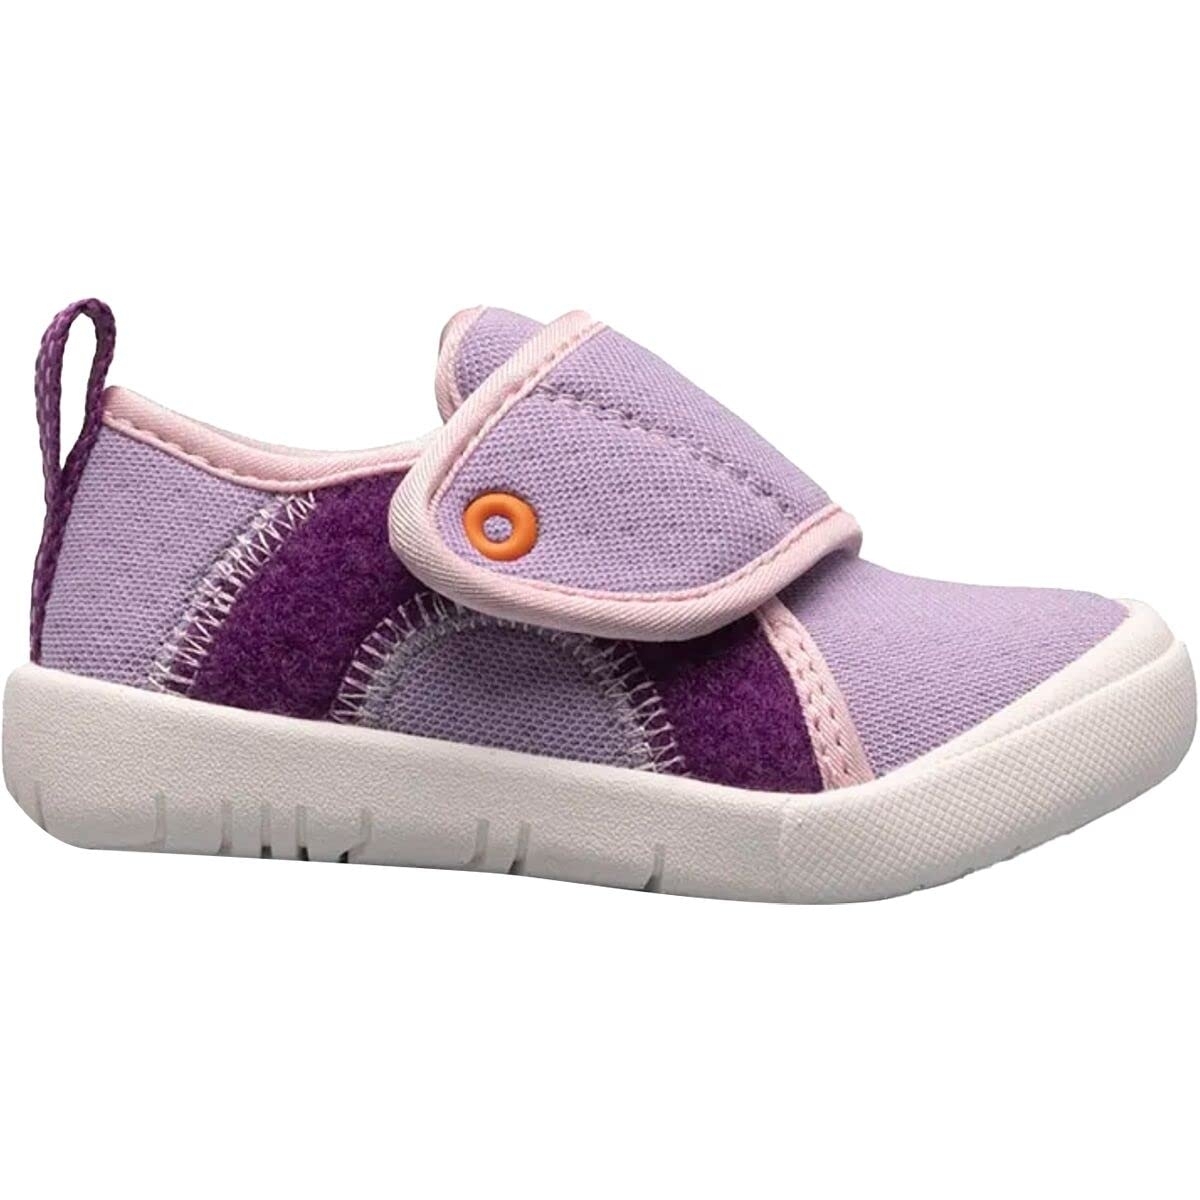 BOGS Unisex Baby Kicker Hook And Loop Shoe Sneaker Lavender Multi - 72811I-541 1 LAVENDER MULTI - LAVENDER MULTI, 7 Little Kid